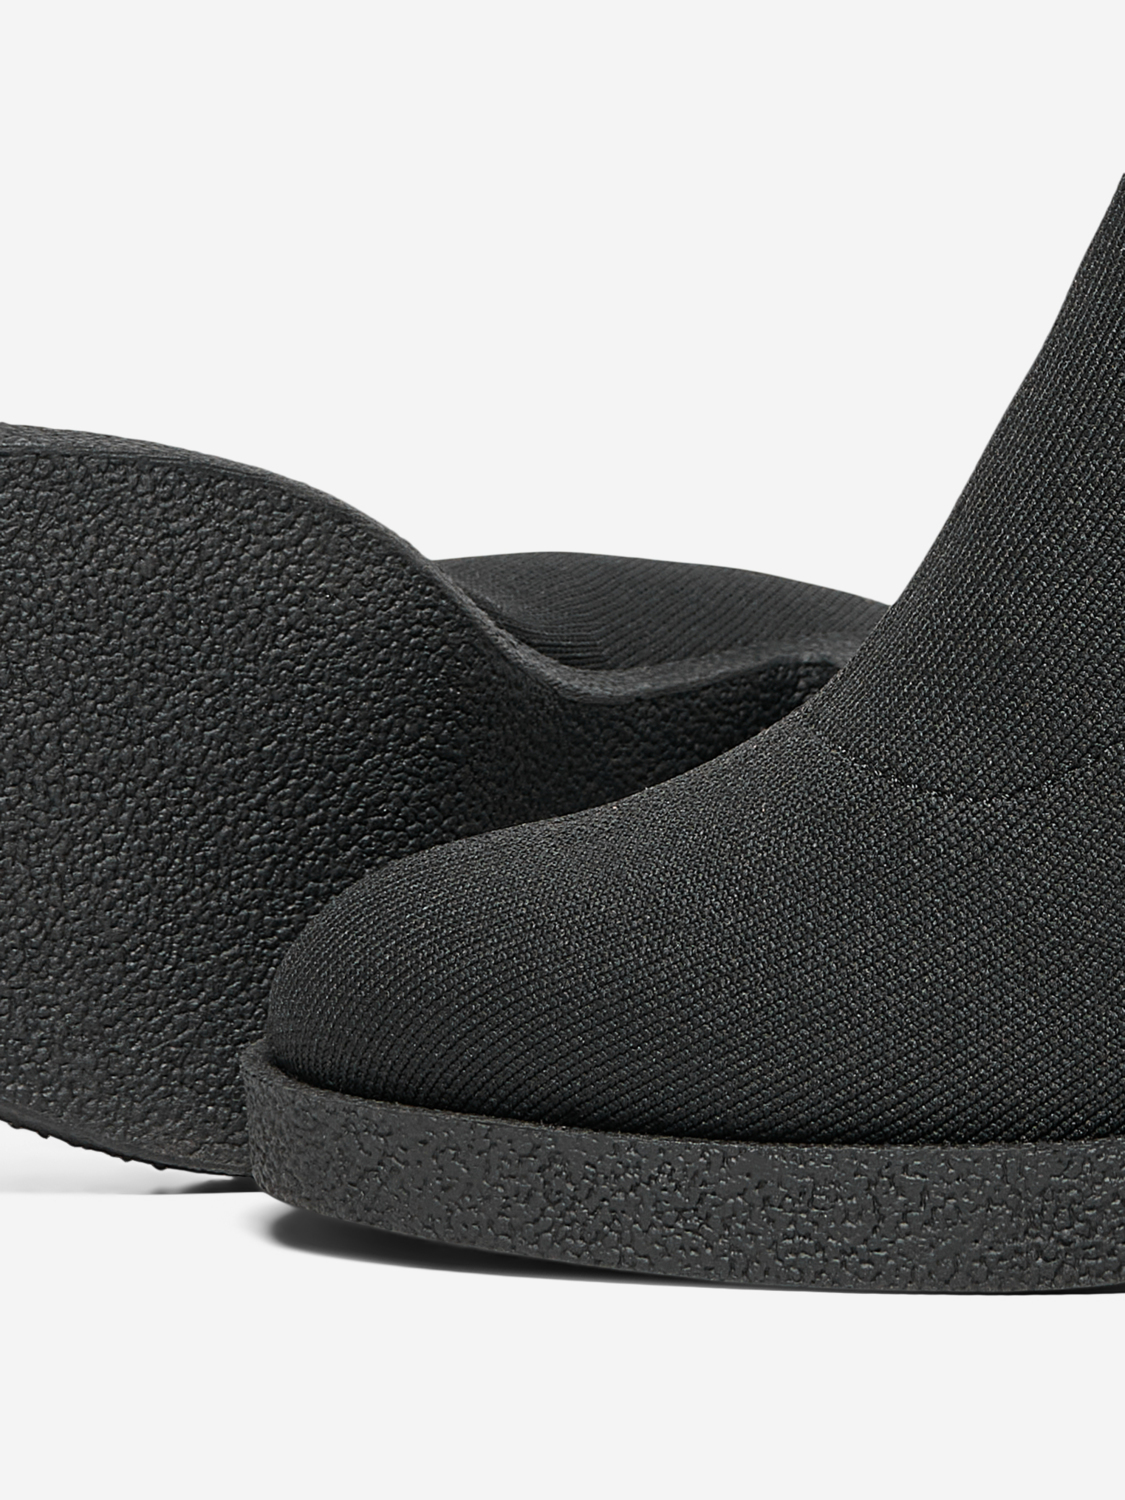 FINAL SALE- Bubble block heel fabric boots, BLACK, large